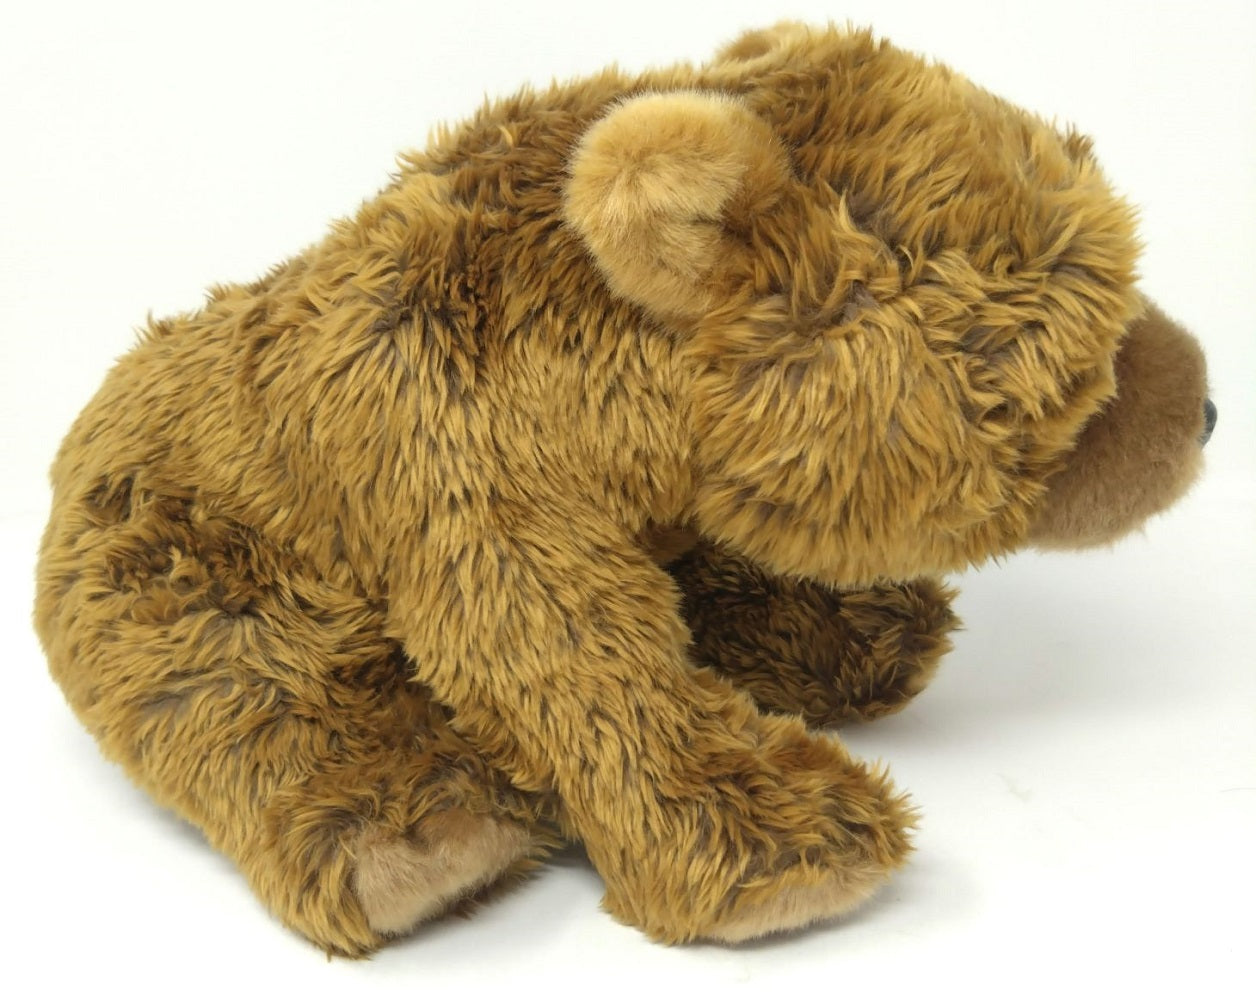 Ravensden Soft Toy Brown Bear Sitting 28cm